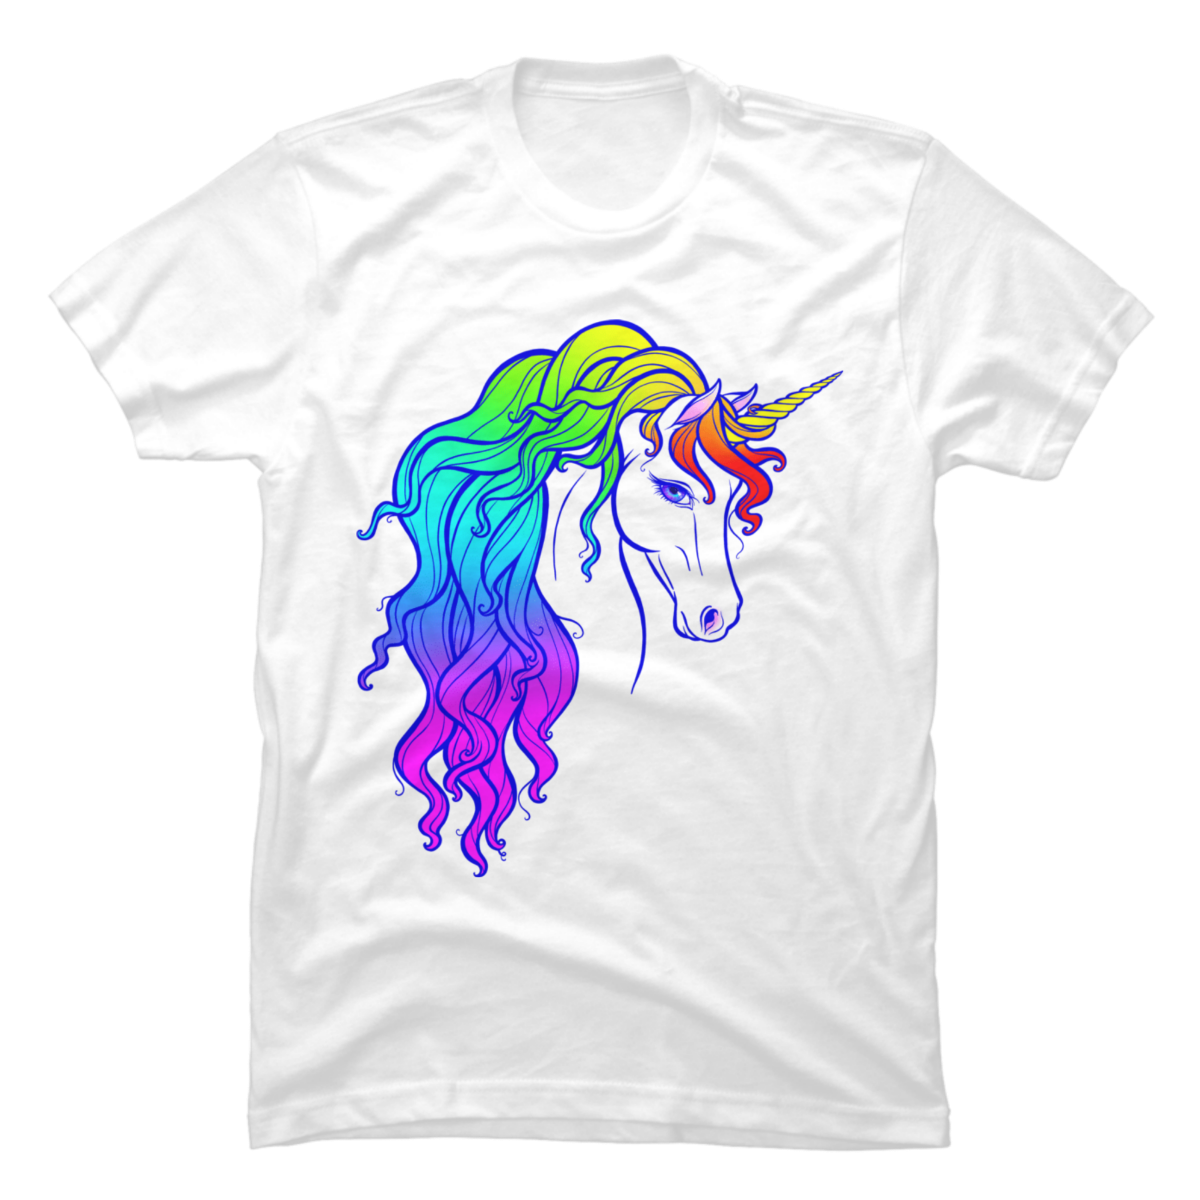 believe in unicorns shirt